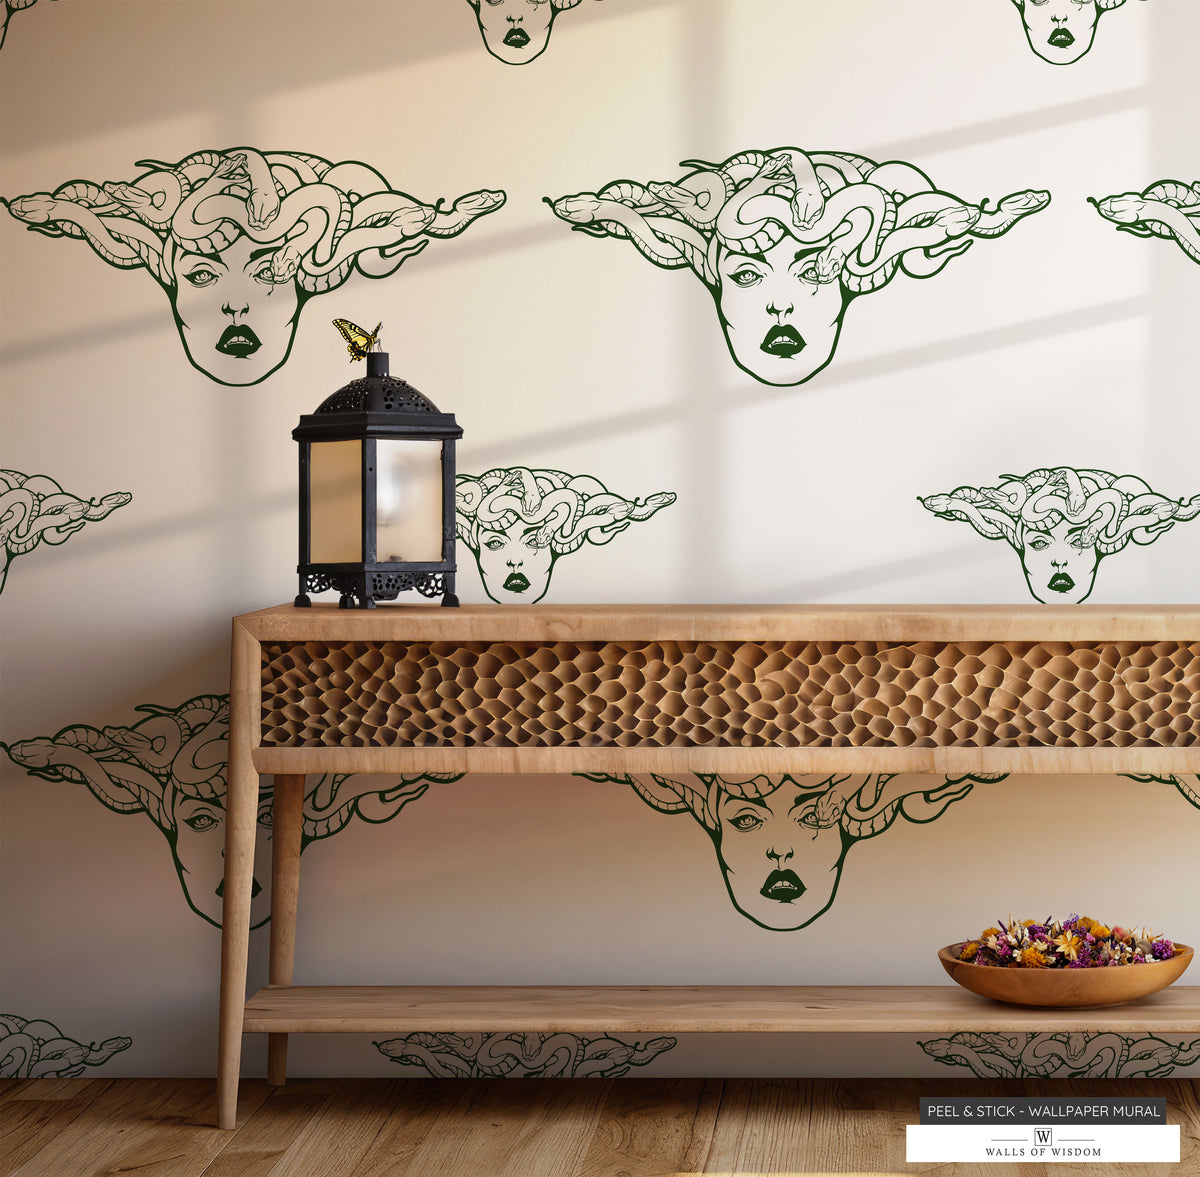 Green Medusa snake design on peelable wallpaper, adding an edgy boho touch to interiors.